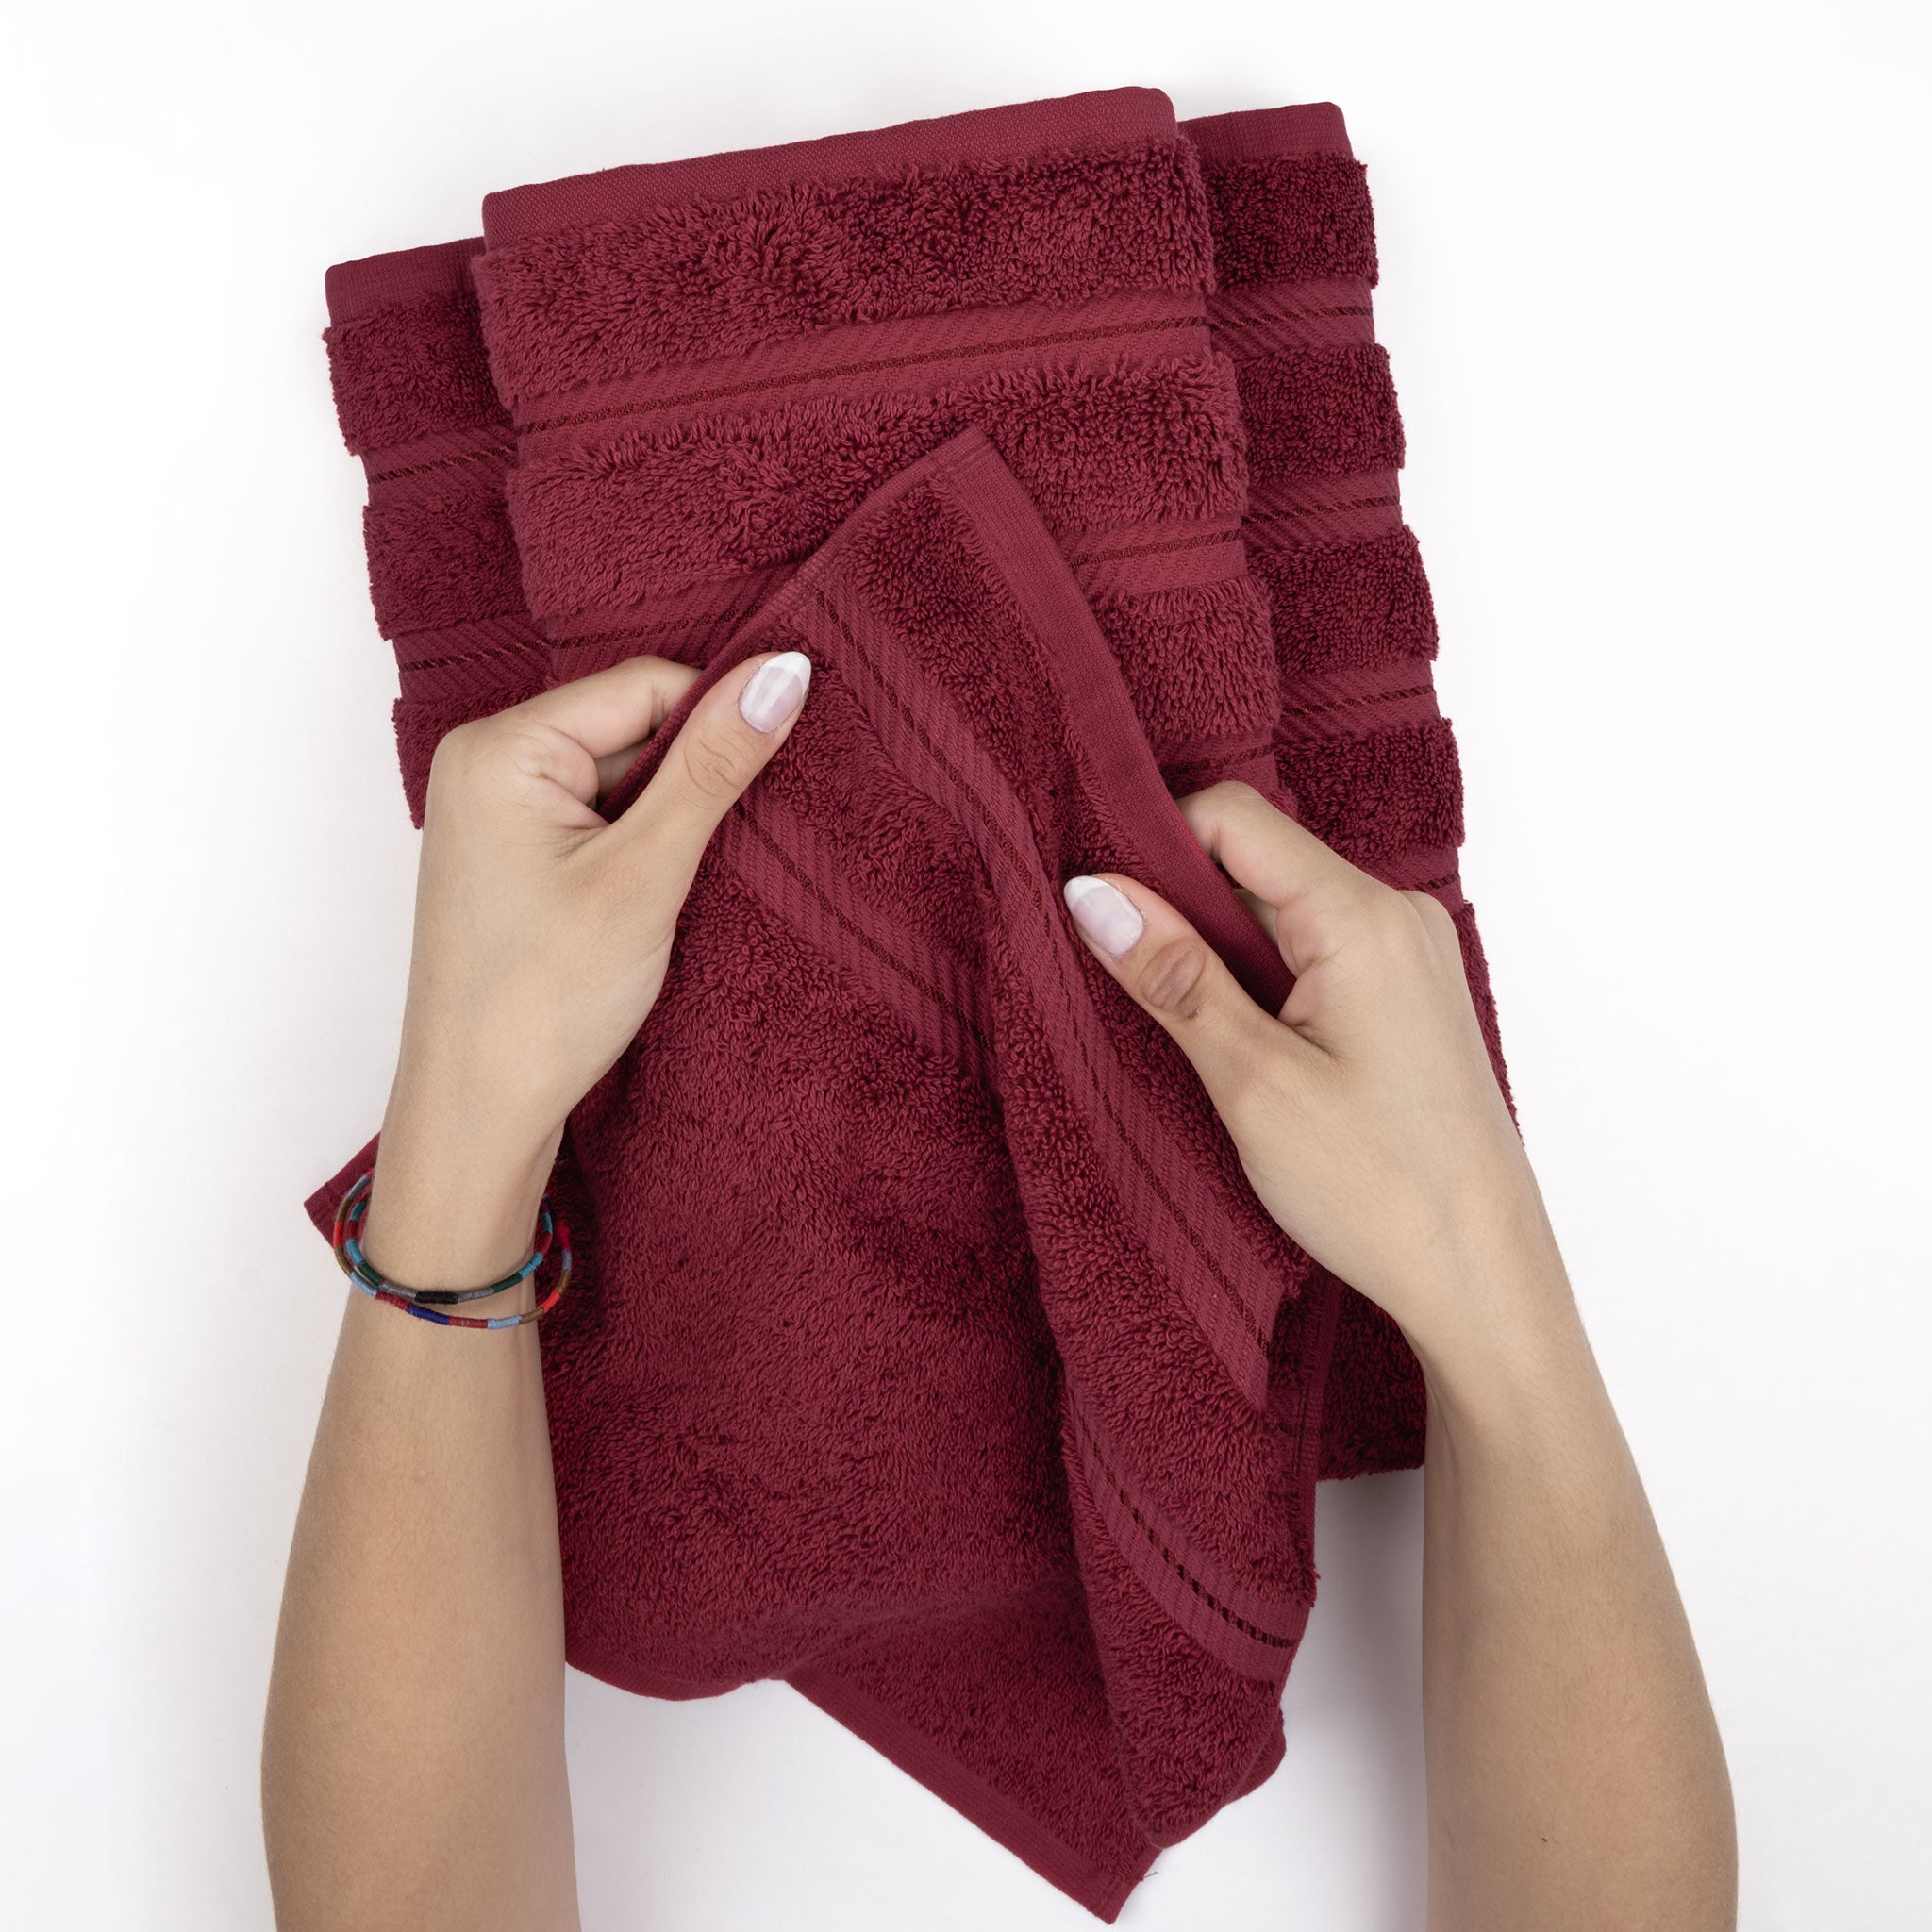 American Soft Linen - 35x70 Jumbo Bath Sheet Turkish Bath Towel - 16 Piece Case Pack - Bordeaux-Red - 4